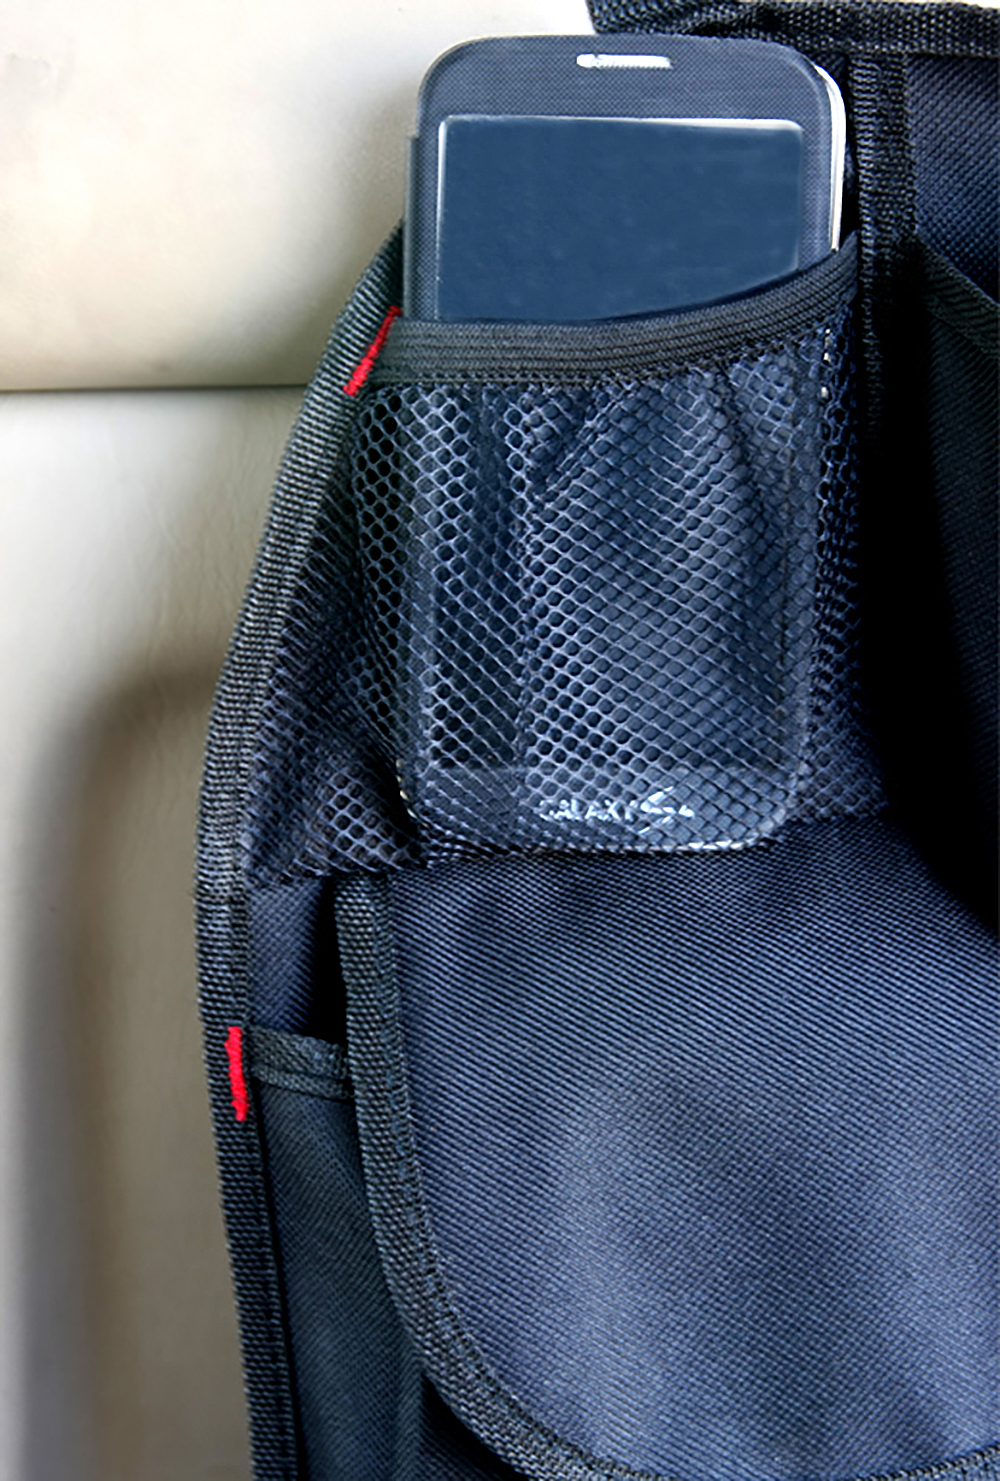 YupbizAuto Car Auto Front/Back Seat Organizer Cell Phone Holder Multi-Pocket Travel Storage Bag, Black Color - image 3 of 6